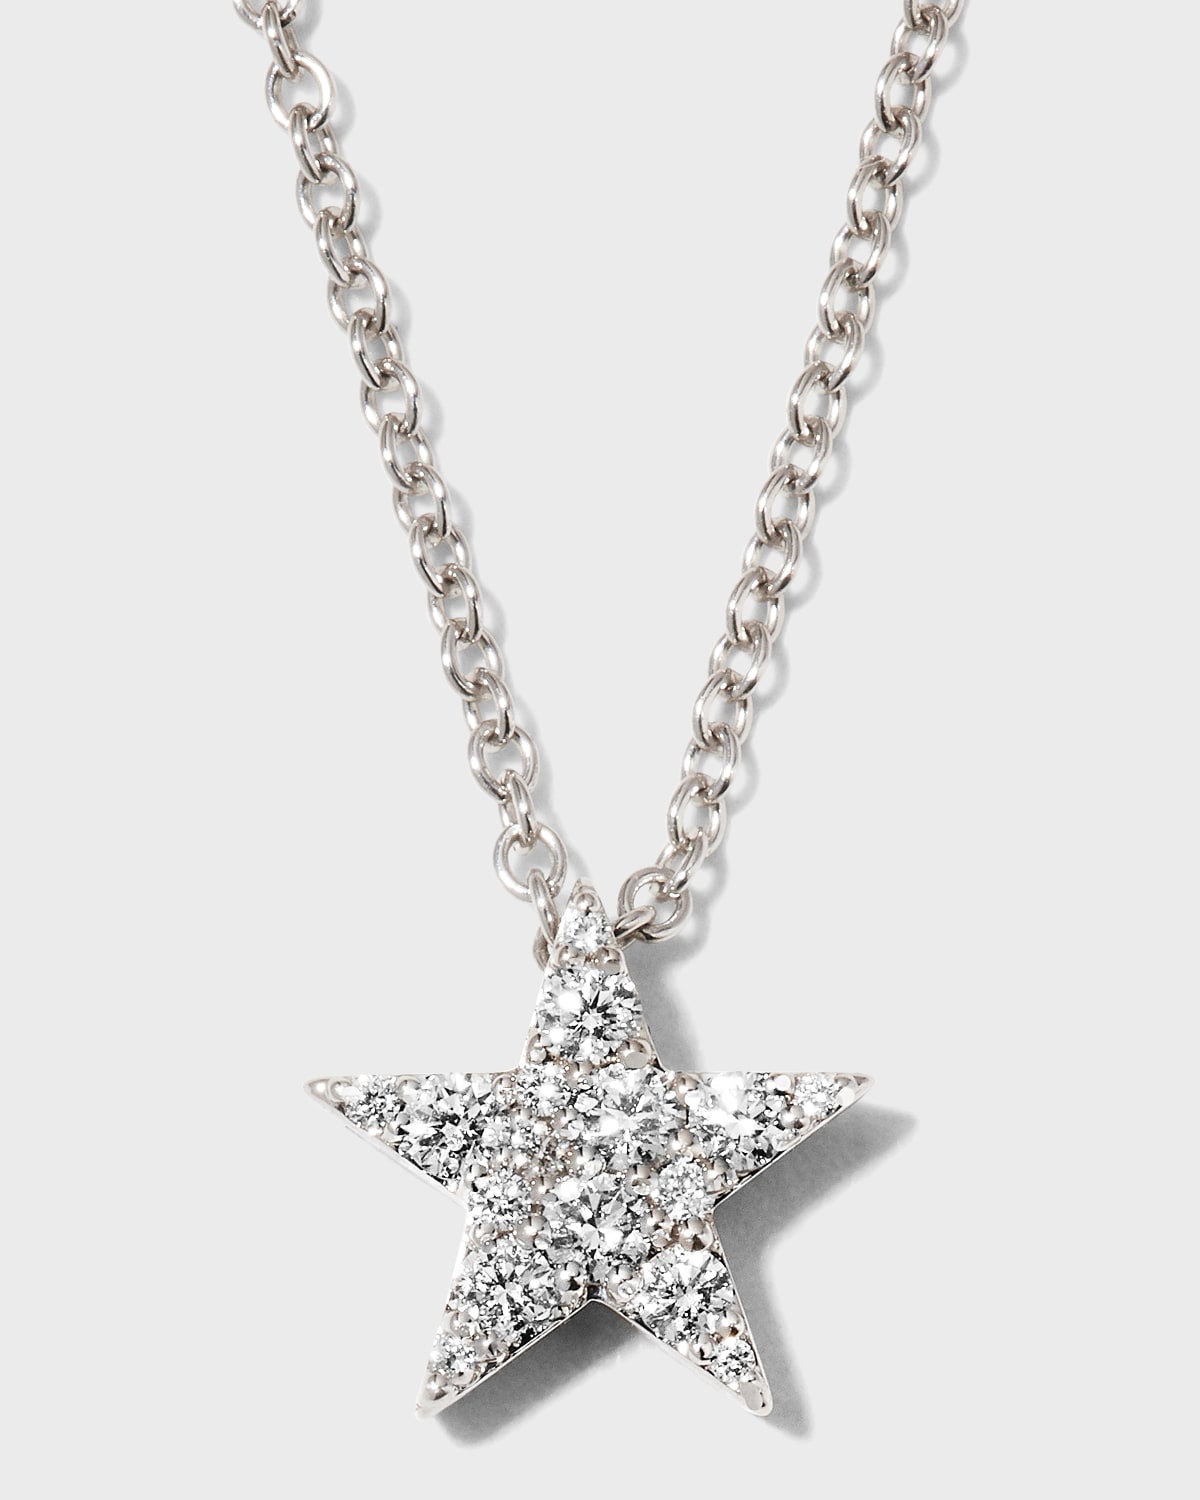 White Gold Luna Pave Star Pendant Necklace, 18"L, 0.16-0.18tcw